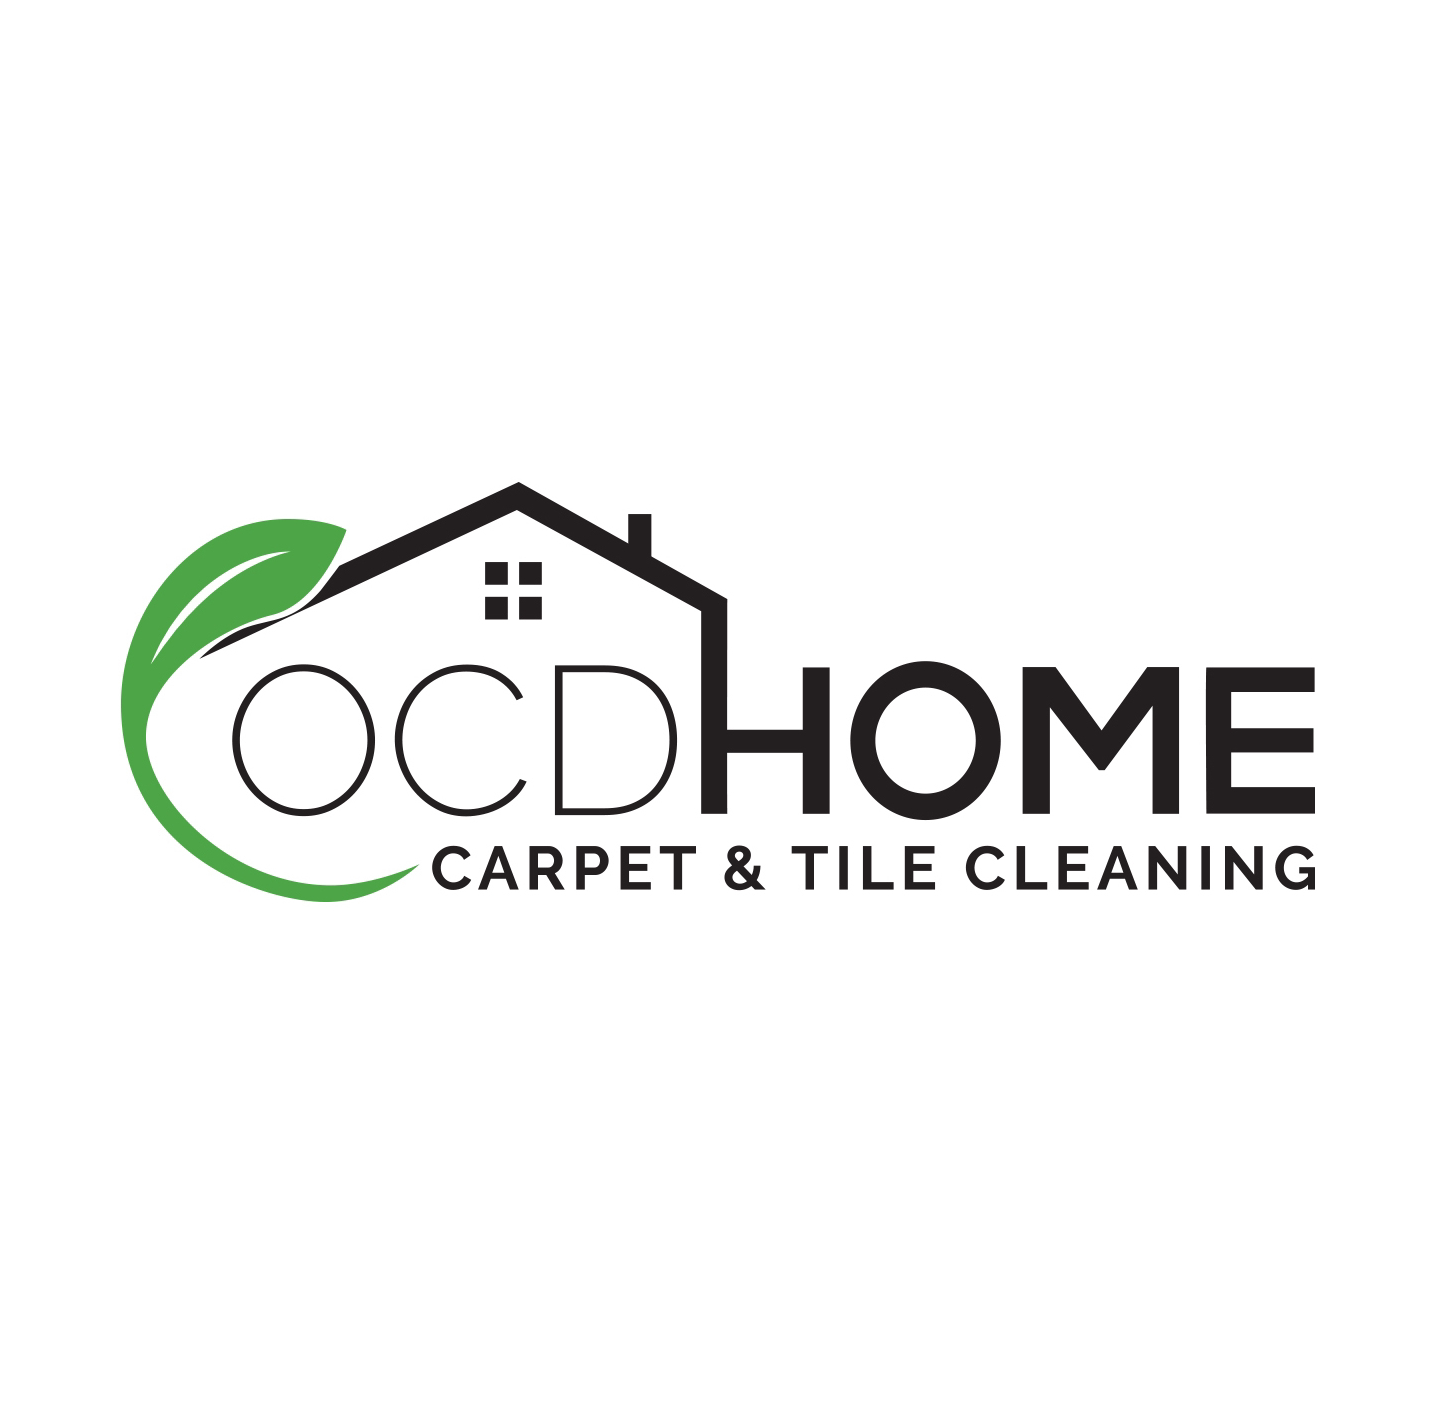 OCD Home Carpet & Tile Cleaning